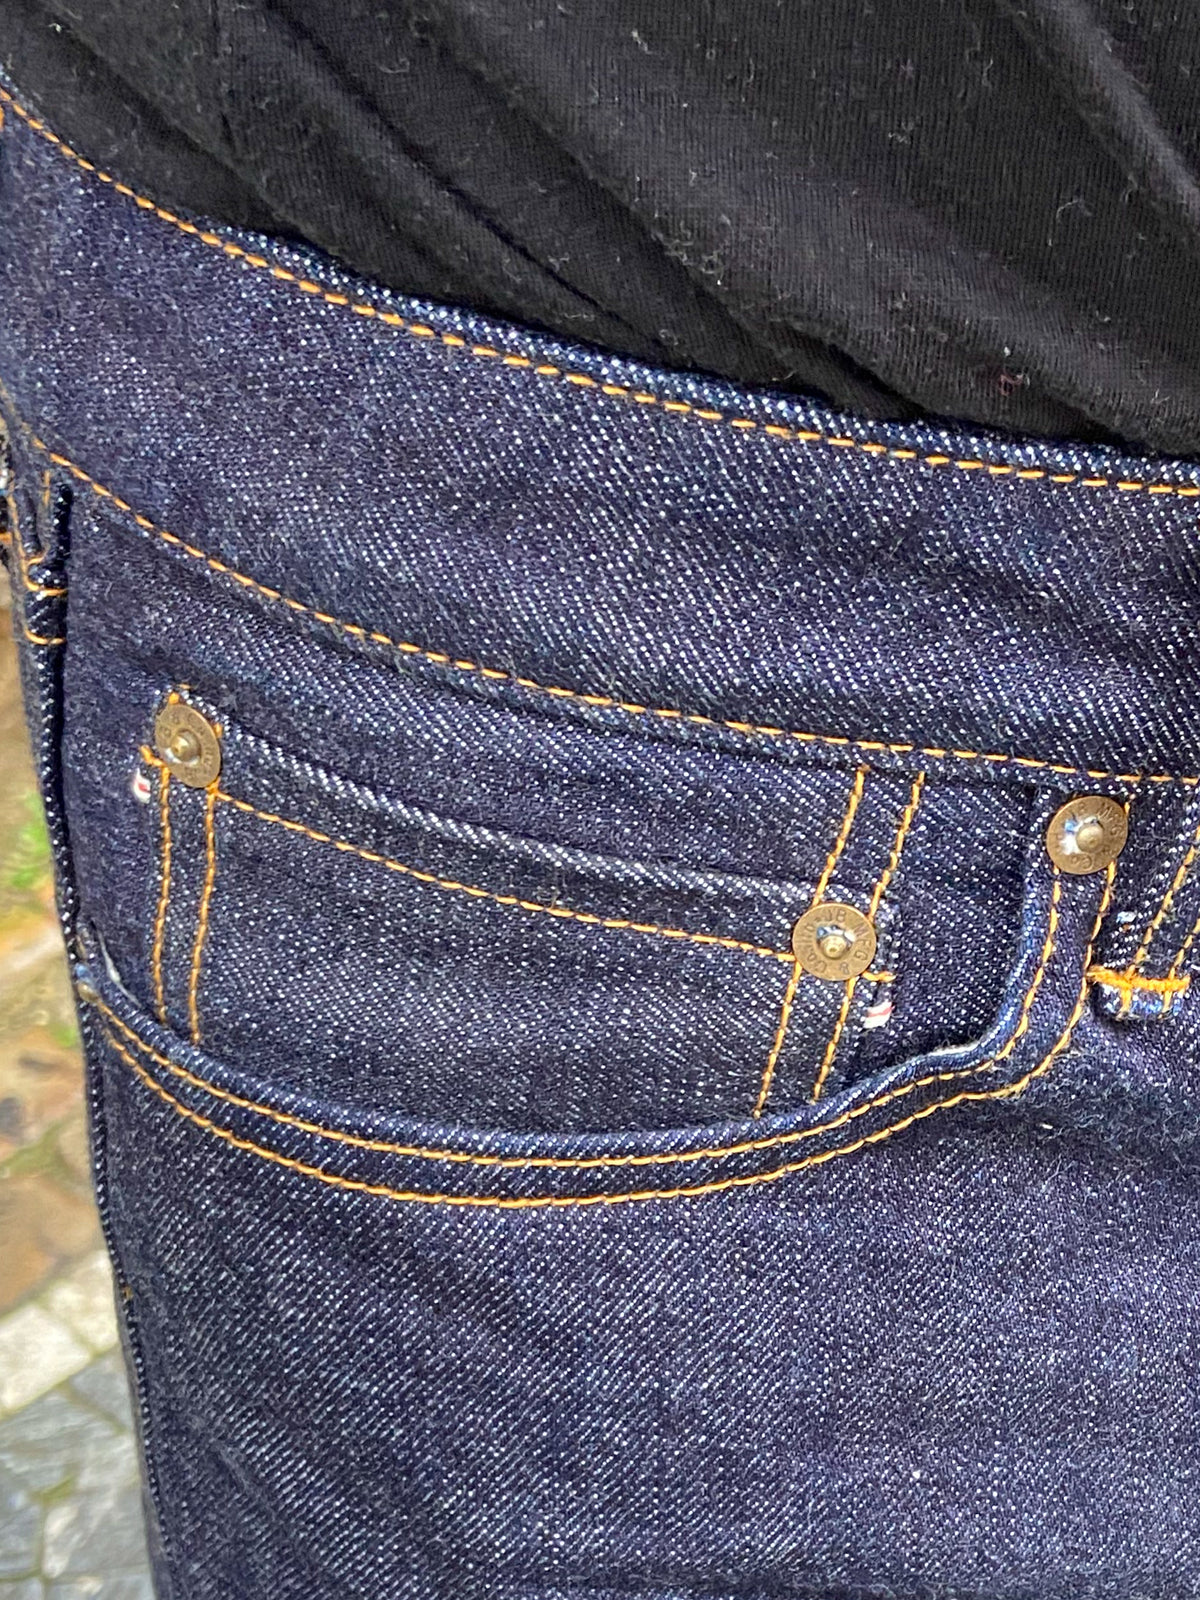 Japan Blue J201 Circle Tapered 14.8oz American Cotton Vintage Selvedge Jeans